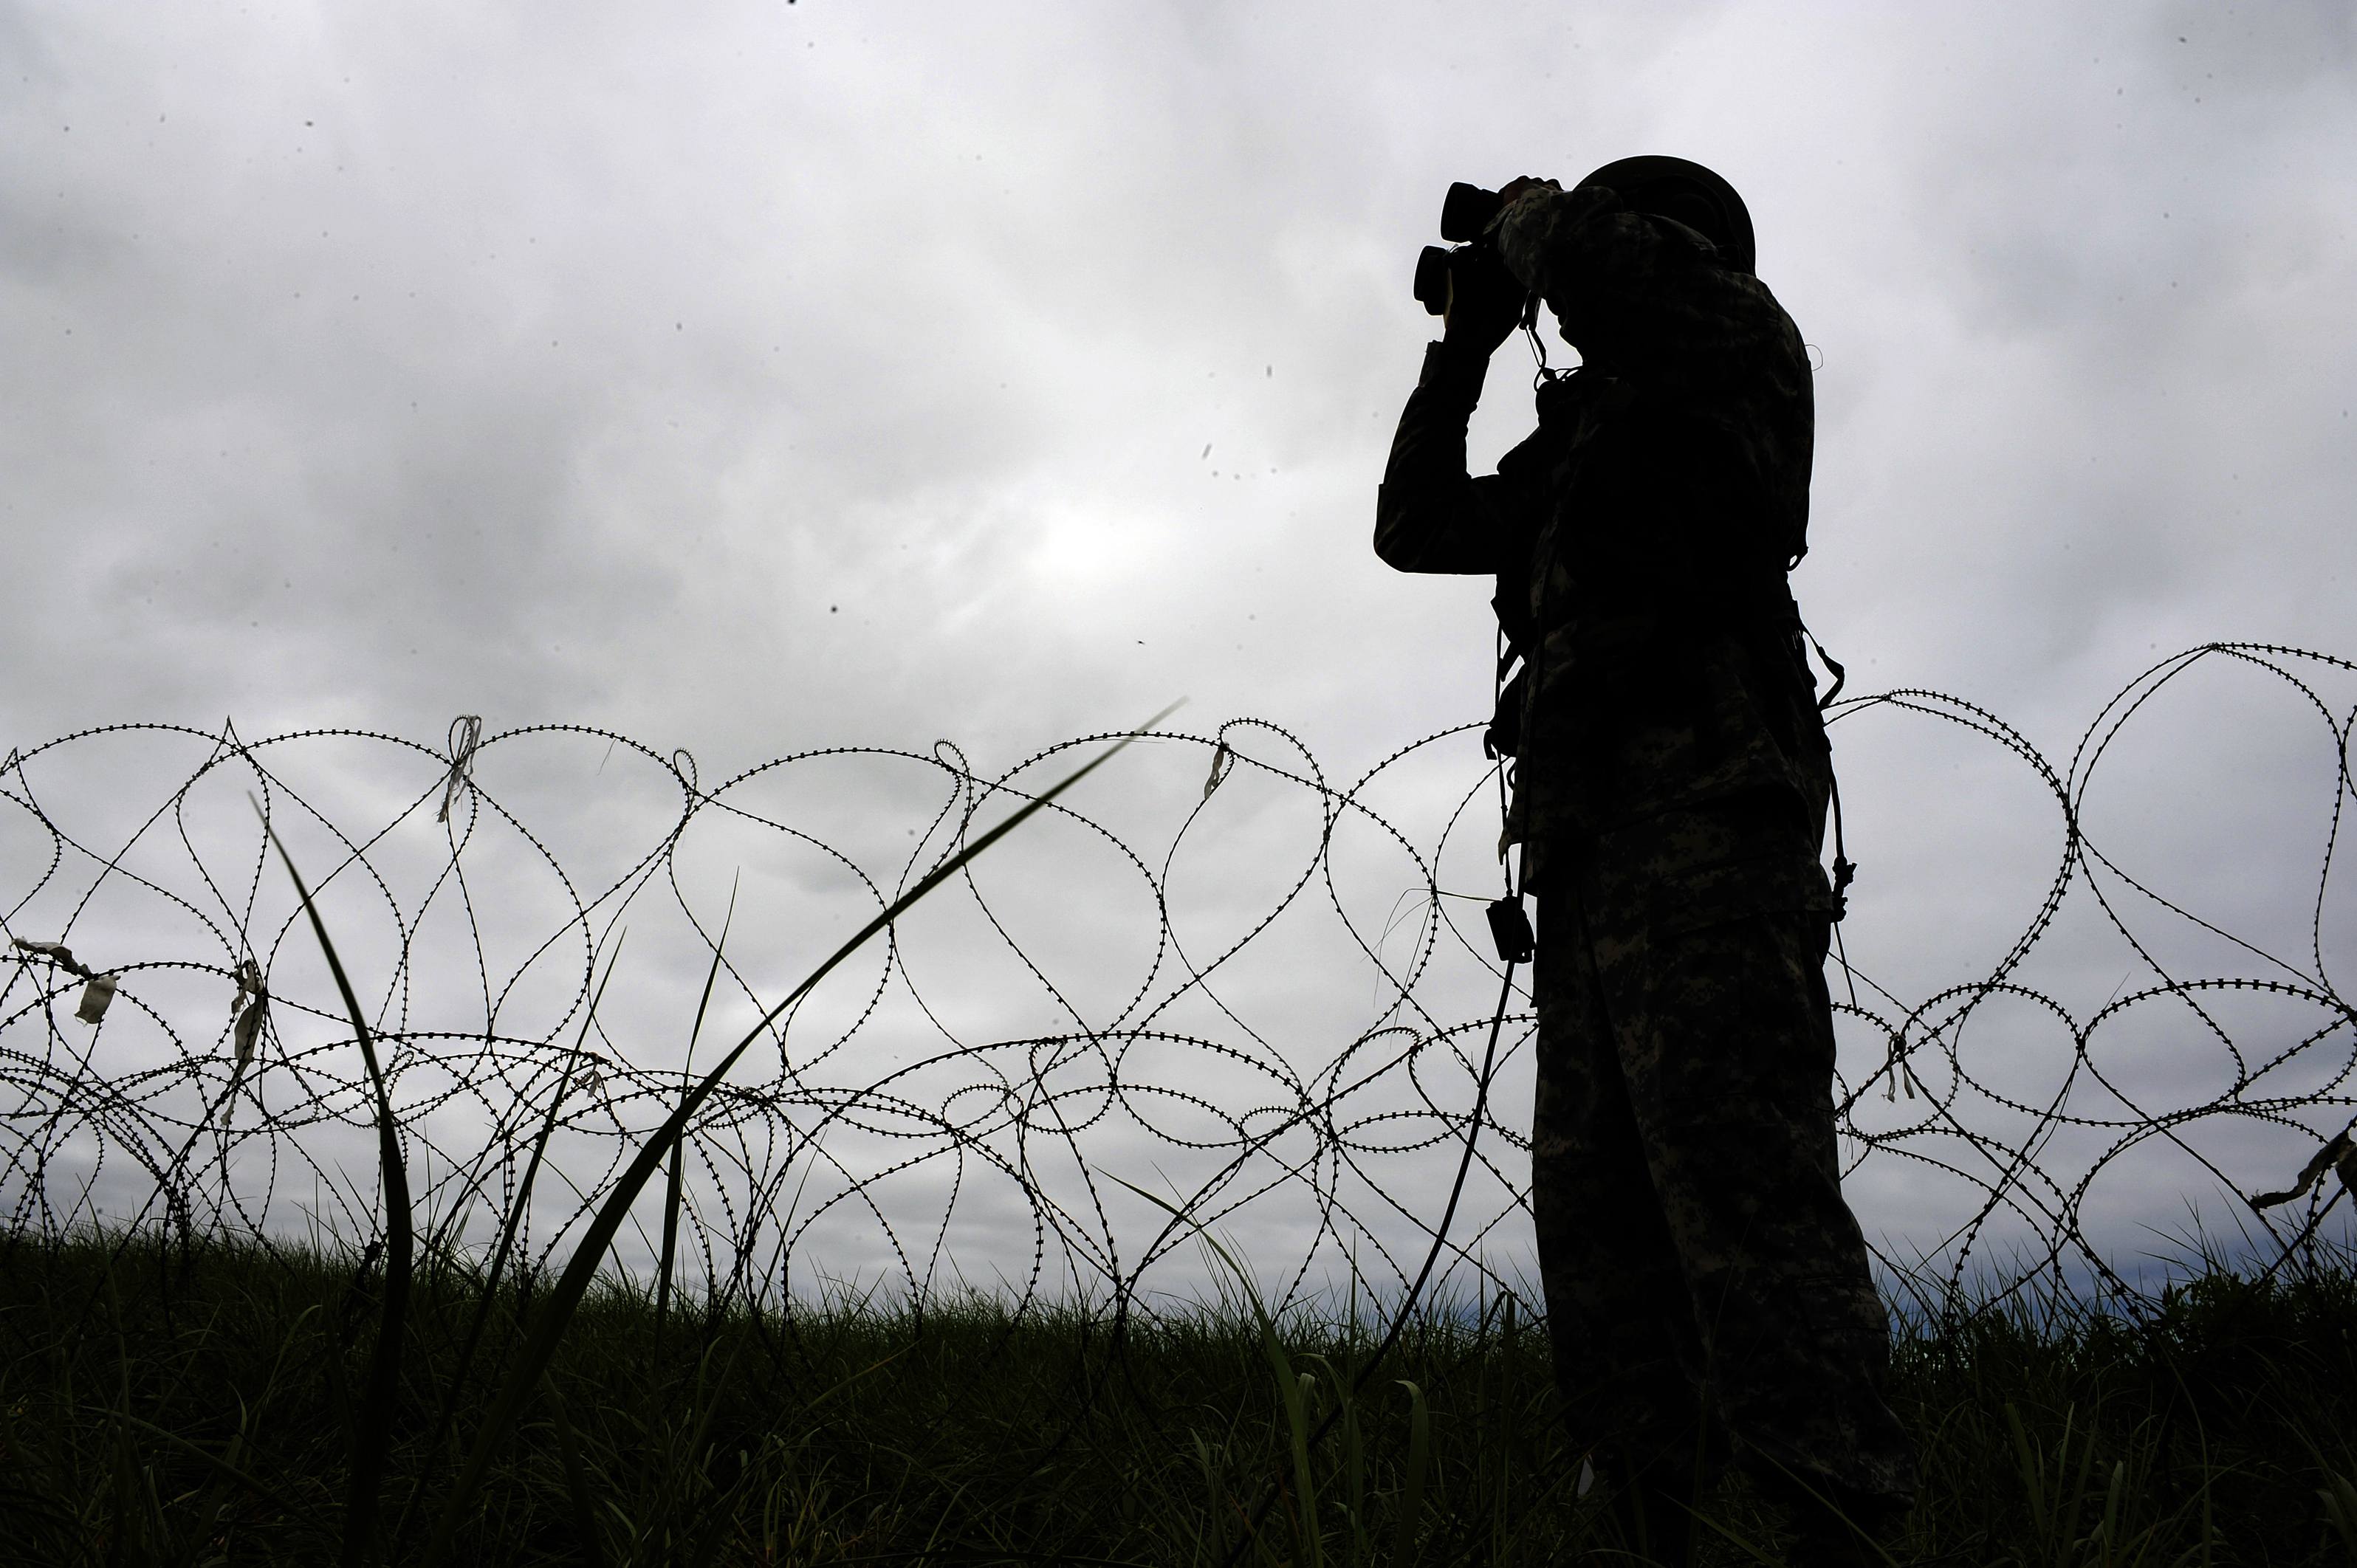 A soldier searching through binoculars